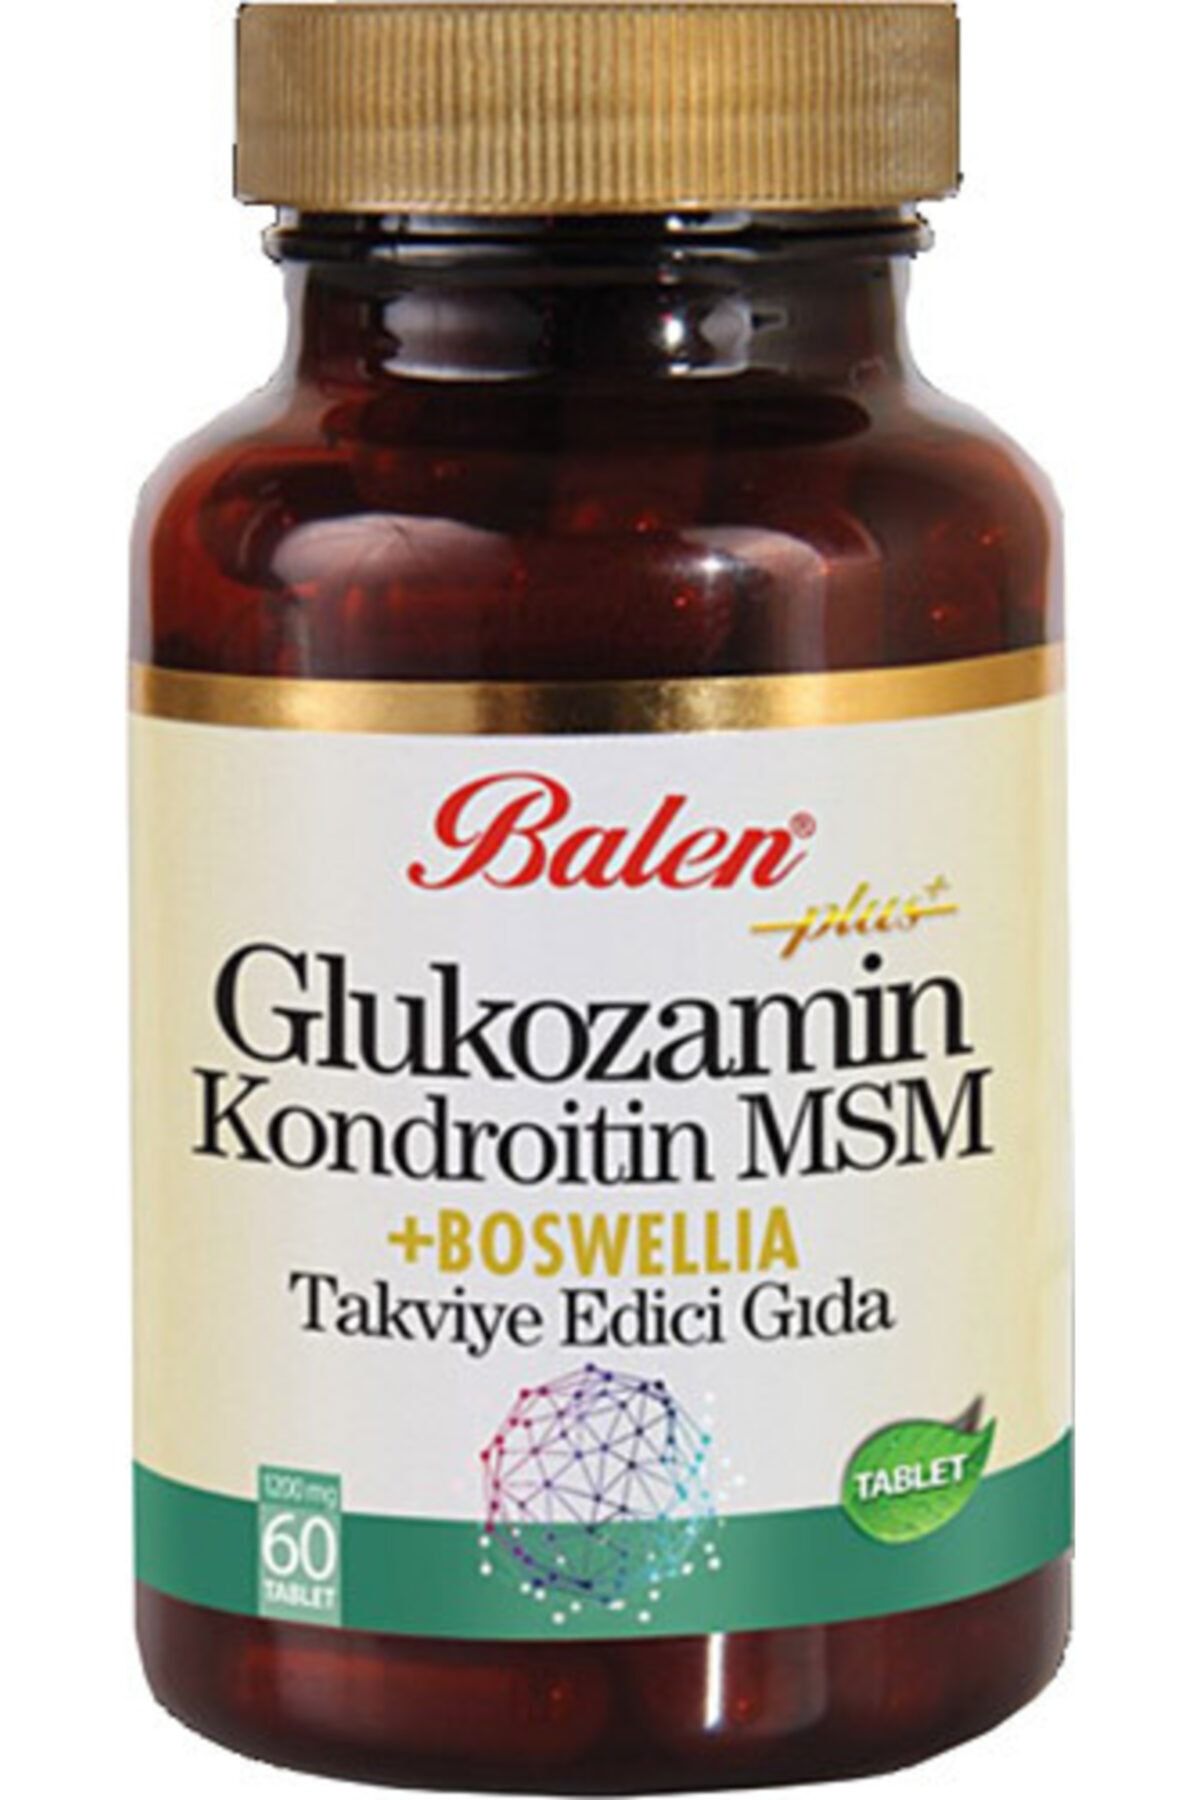 Balen Glukozamin Kondroitin Msm + Boswellia 60 Tablet  1200 Mg